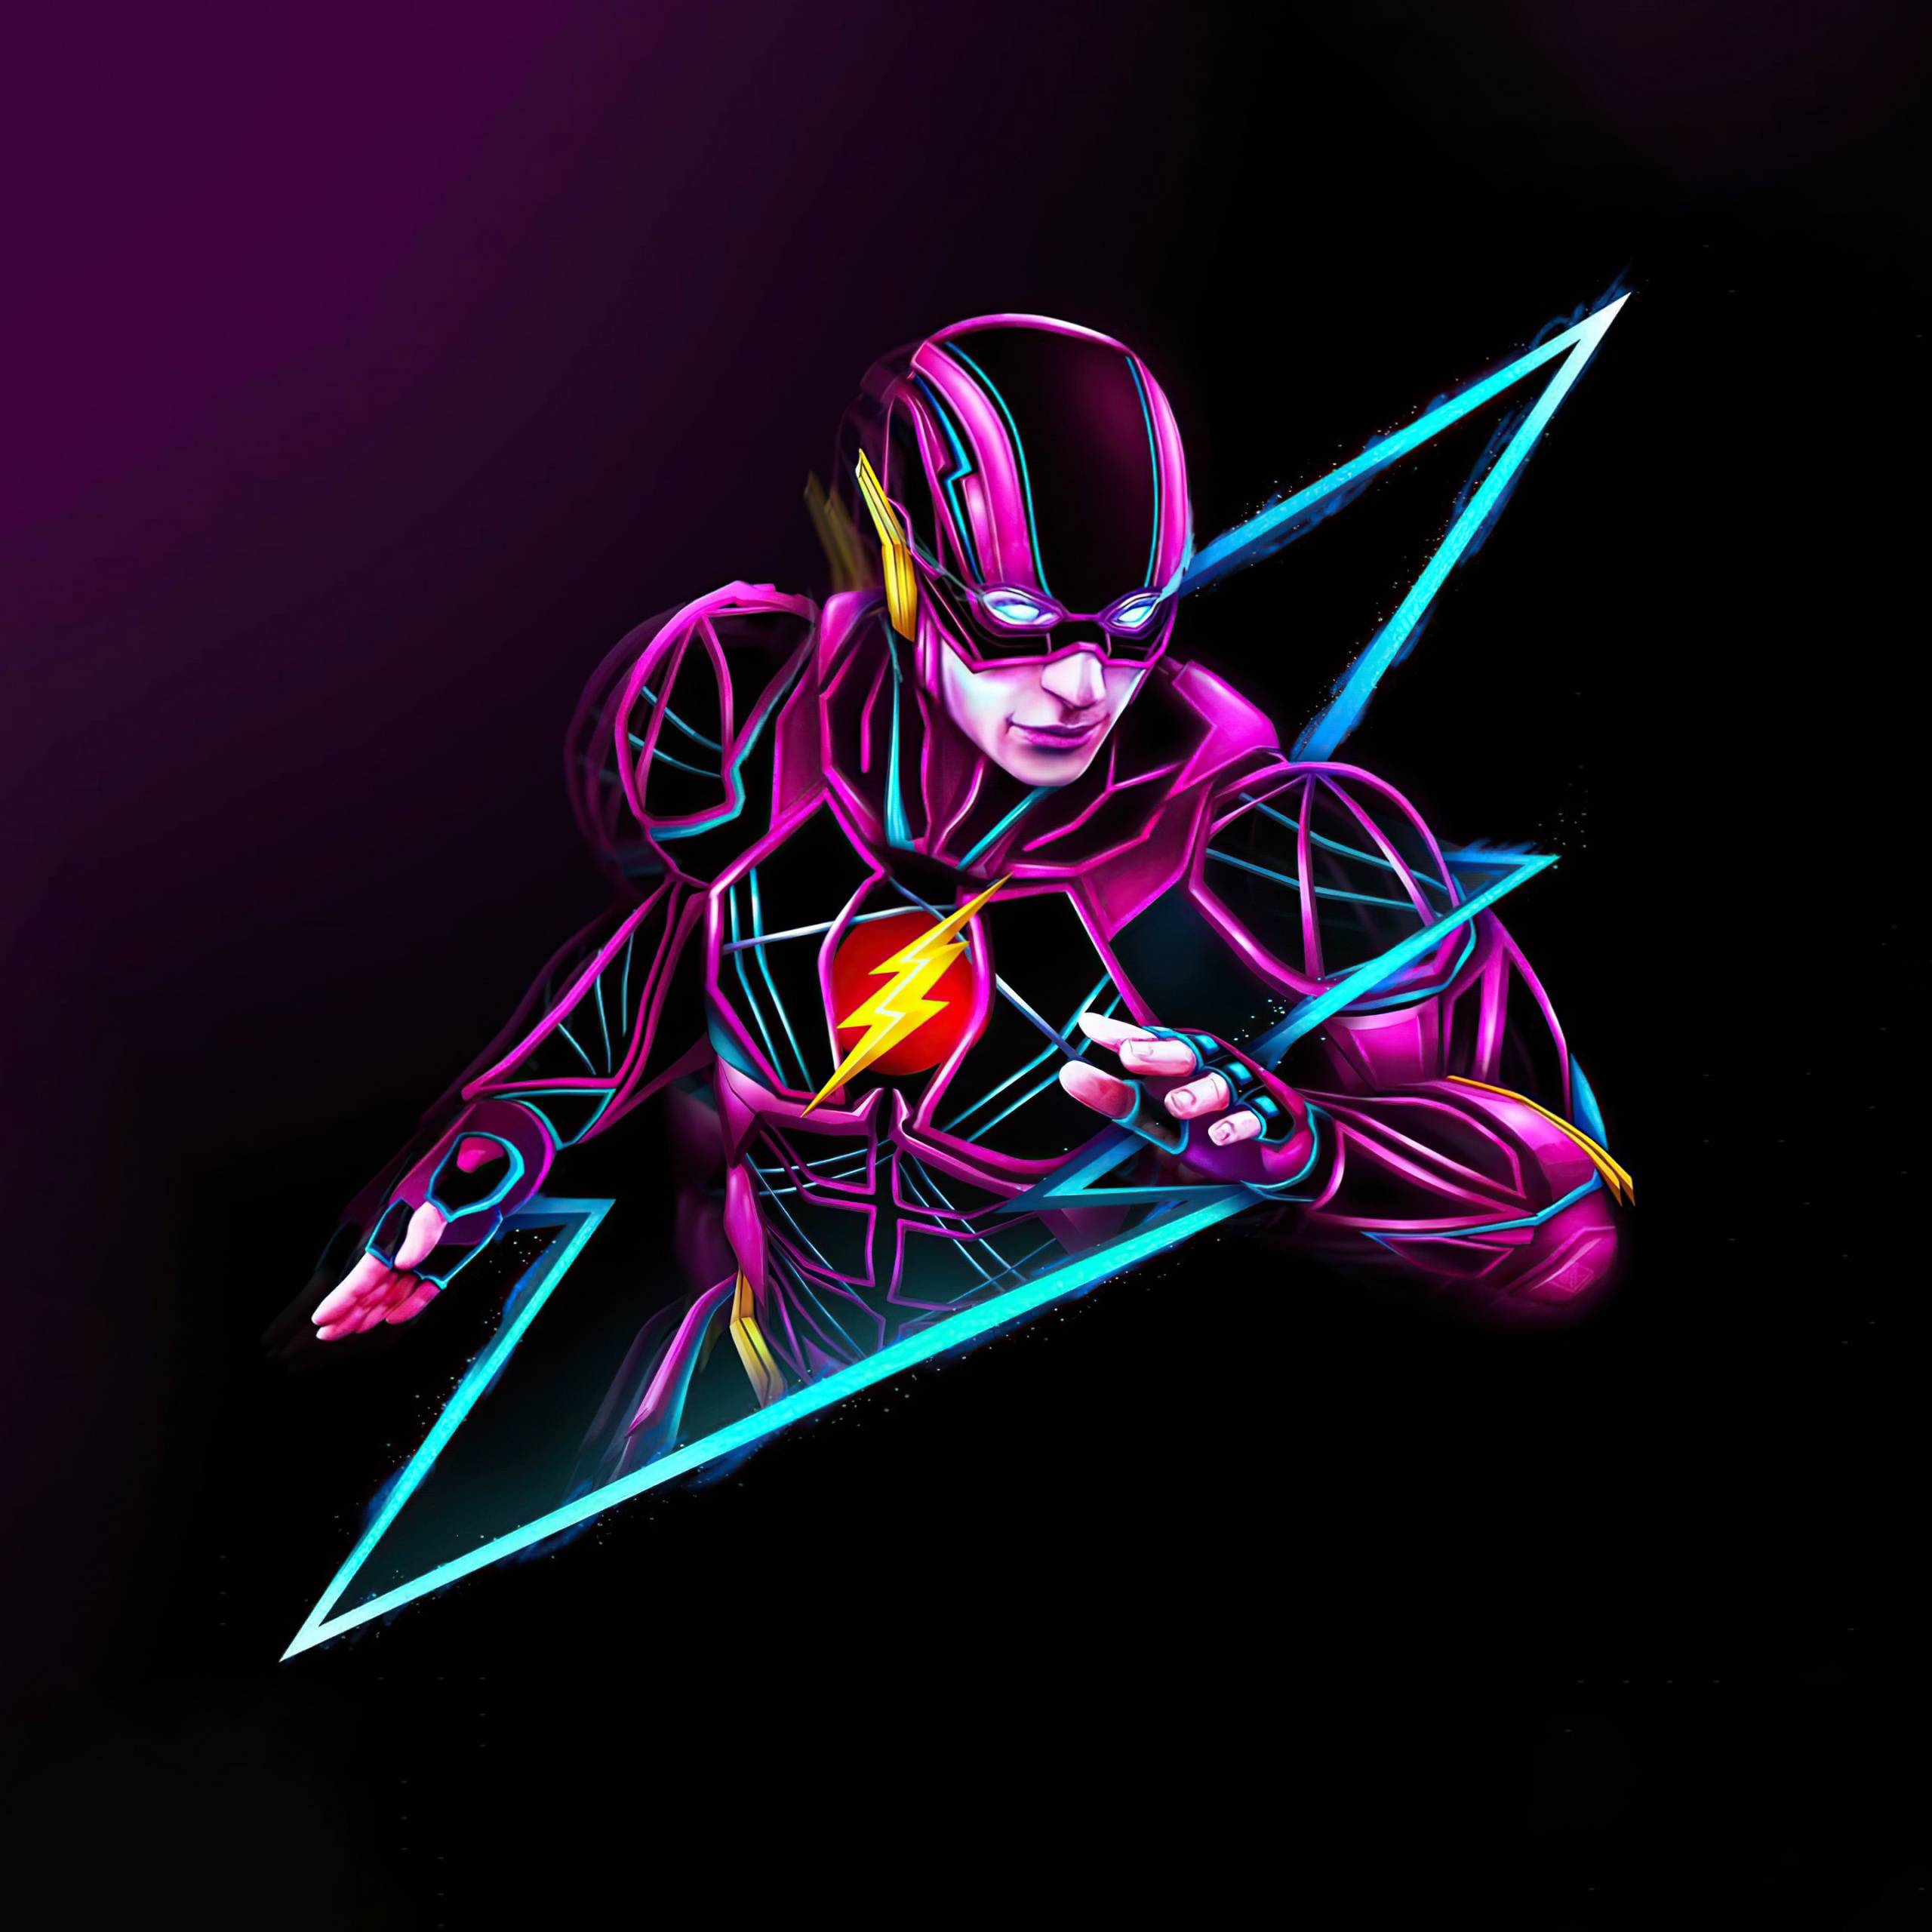 The Flash Wallpaper 4K, Neon art, Purple background, Multicolor, 5K, Graphics CGI